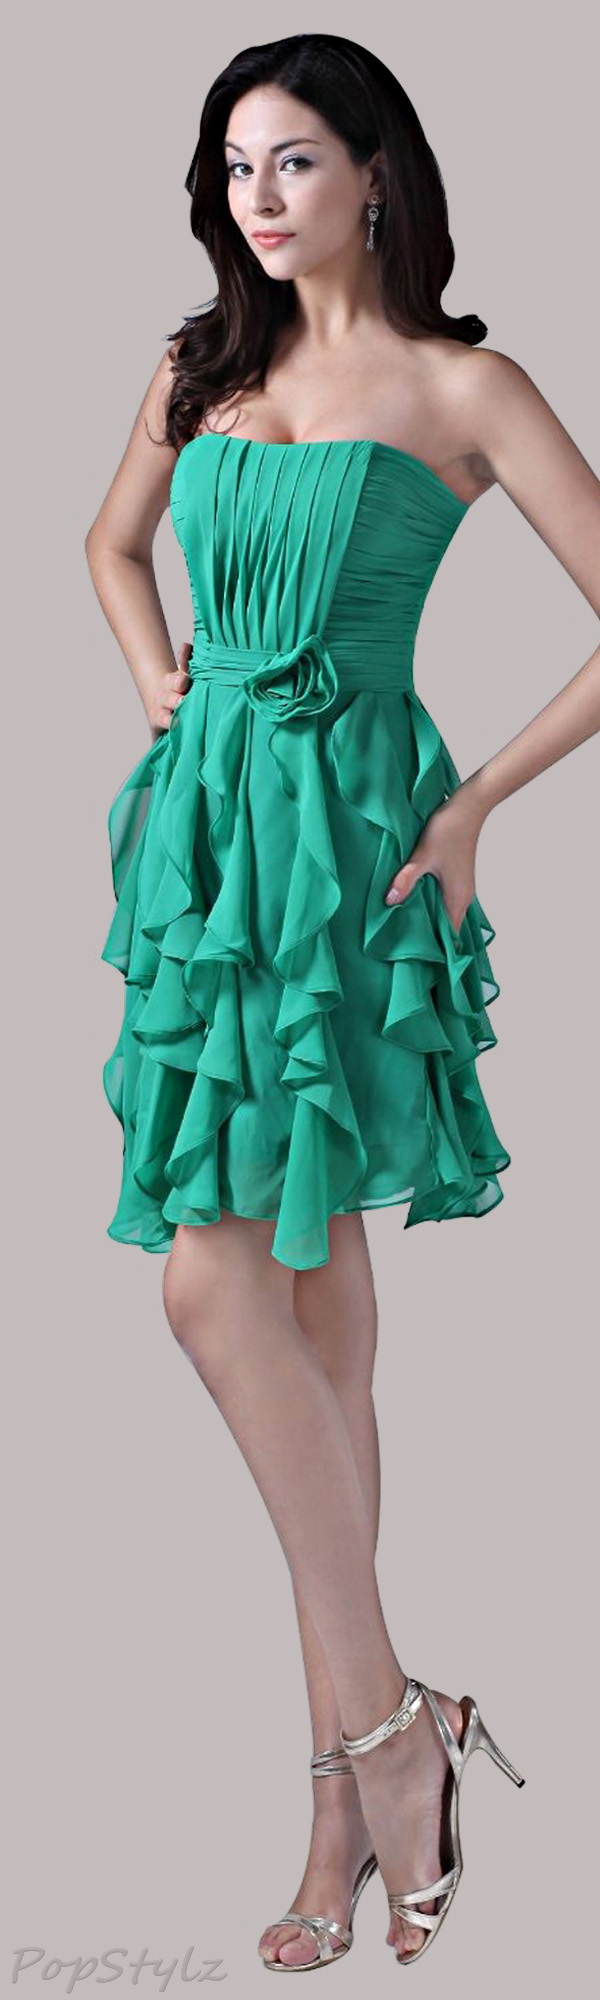 Honeystore Chiffon Ruched Mini Cocktail Dress